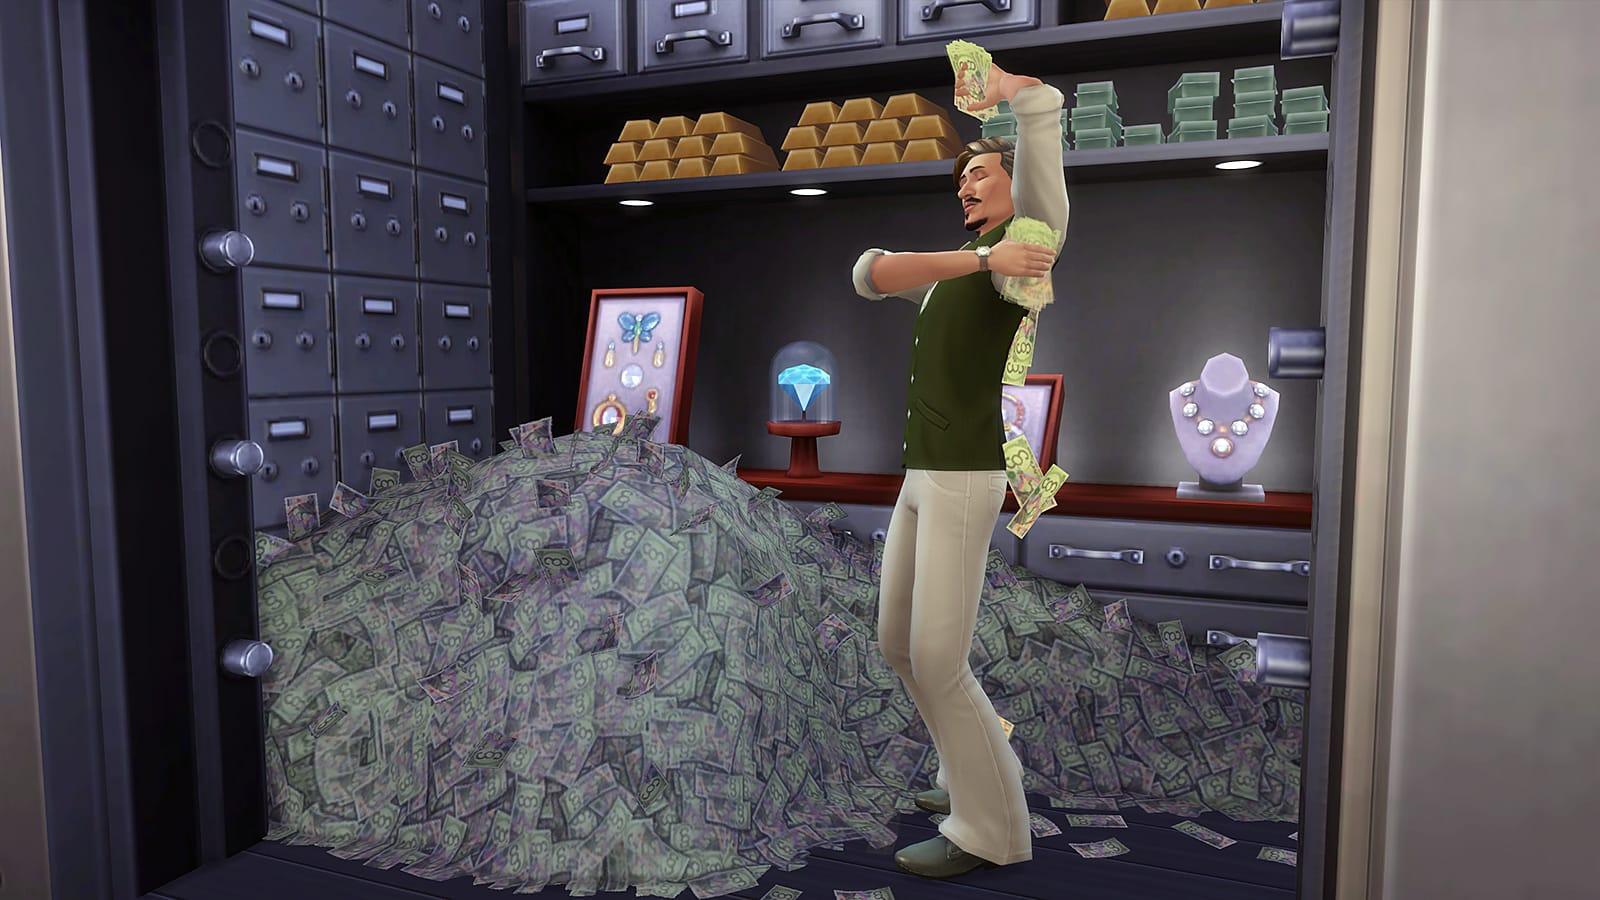 Sims 4 Cheats: Unlock Infinite Money, Skills & Relationship Cheats